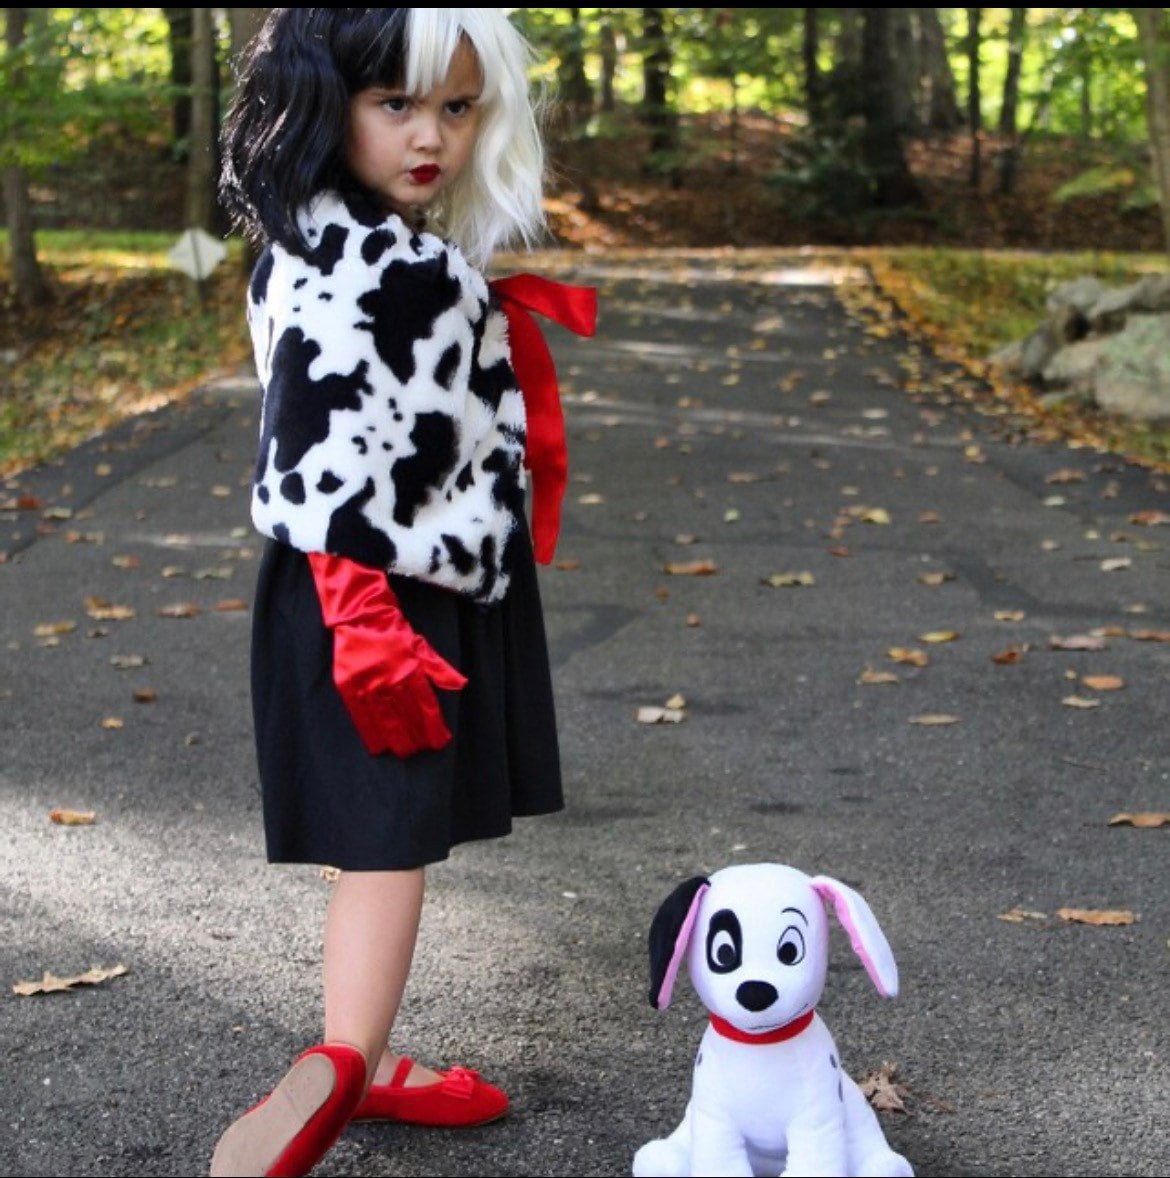 Disney Cruella De Vil Costume for Kids ? 101 Dalmatians size 7/8-